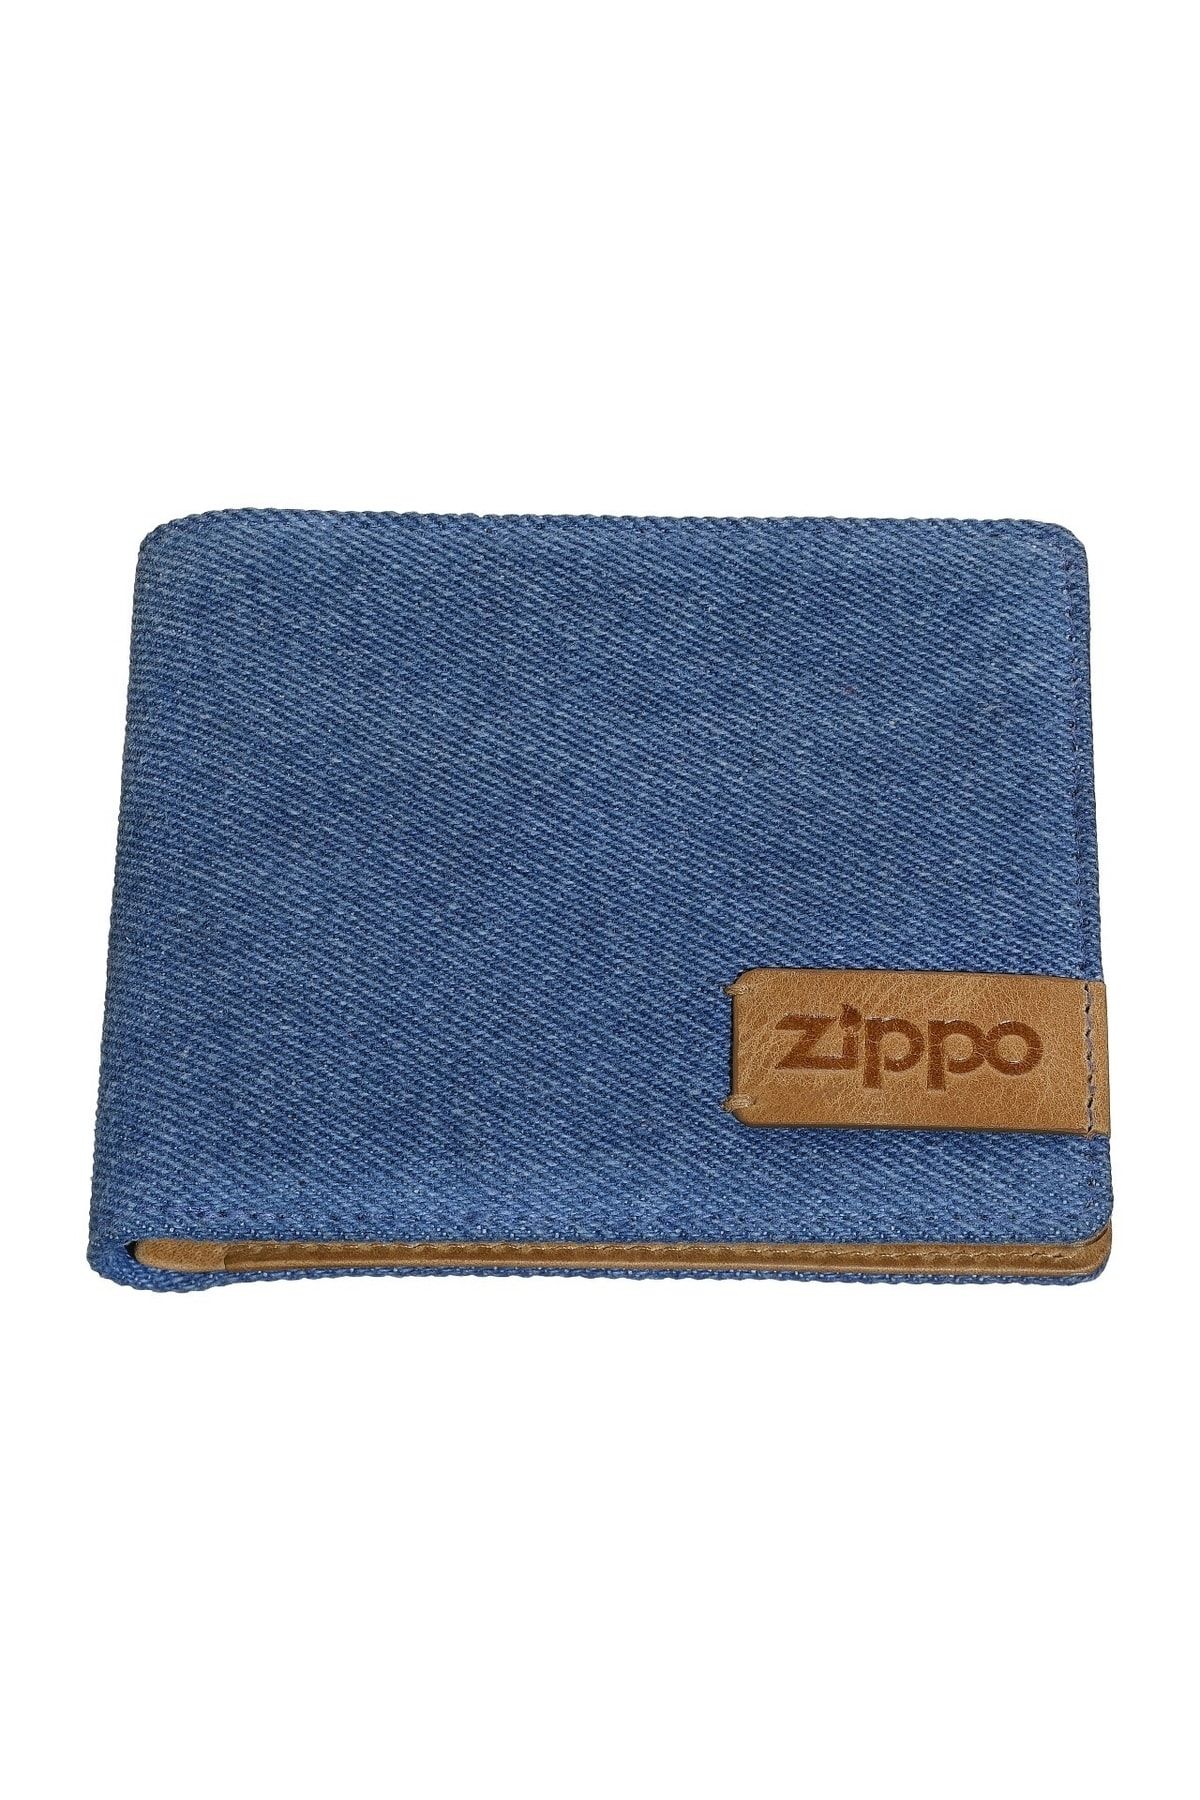 Zippo Cüzdan Mens Wallet Denim Blue Tan 2007140